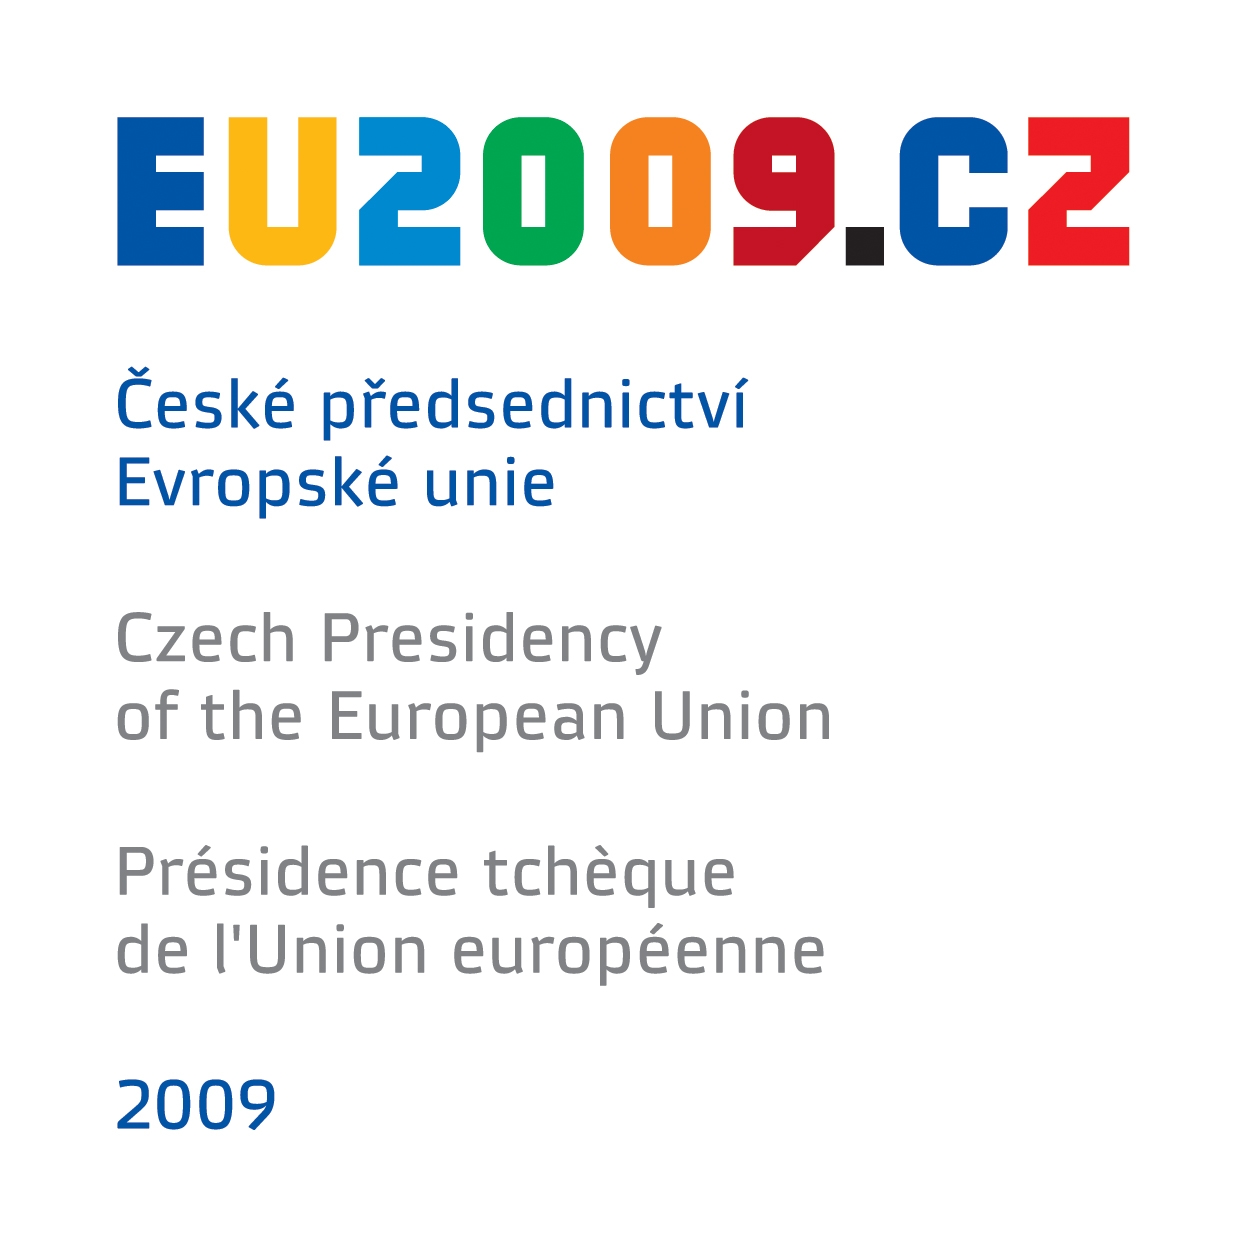 The logo of the 2009 Czech Presidency of the EU